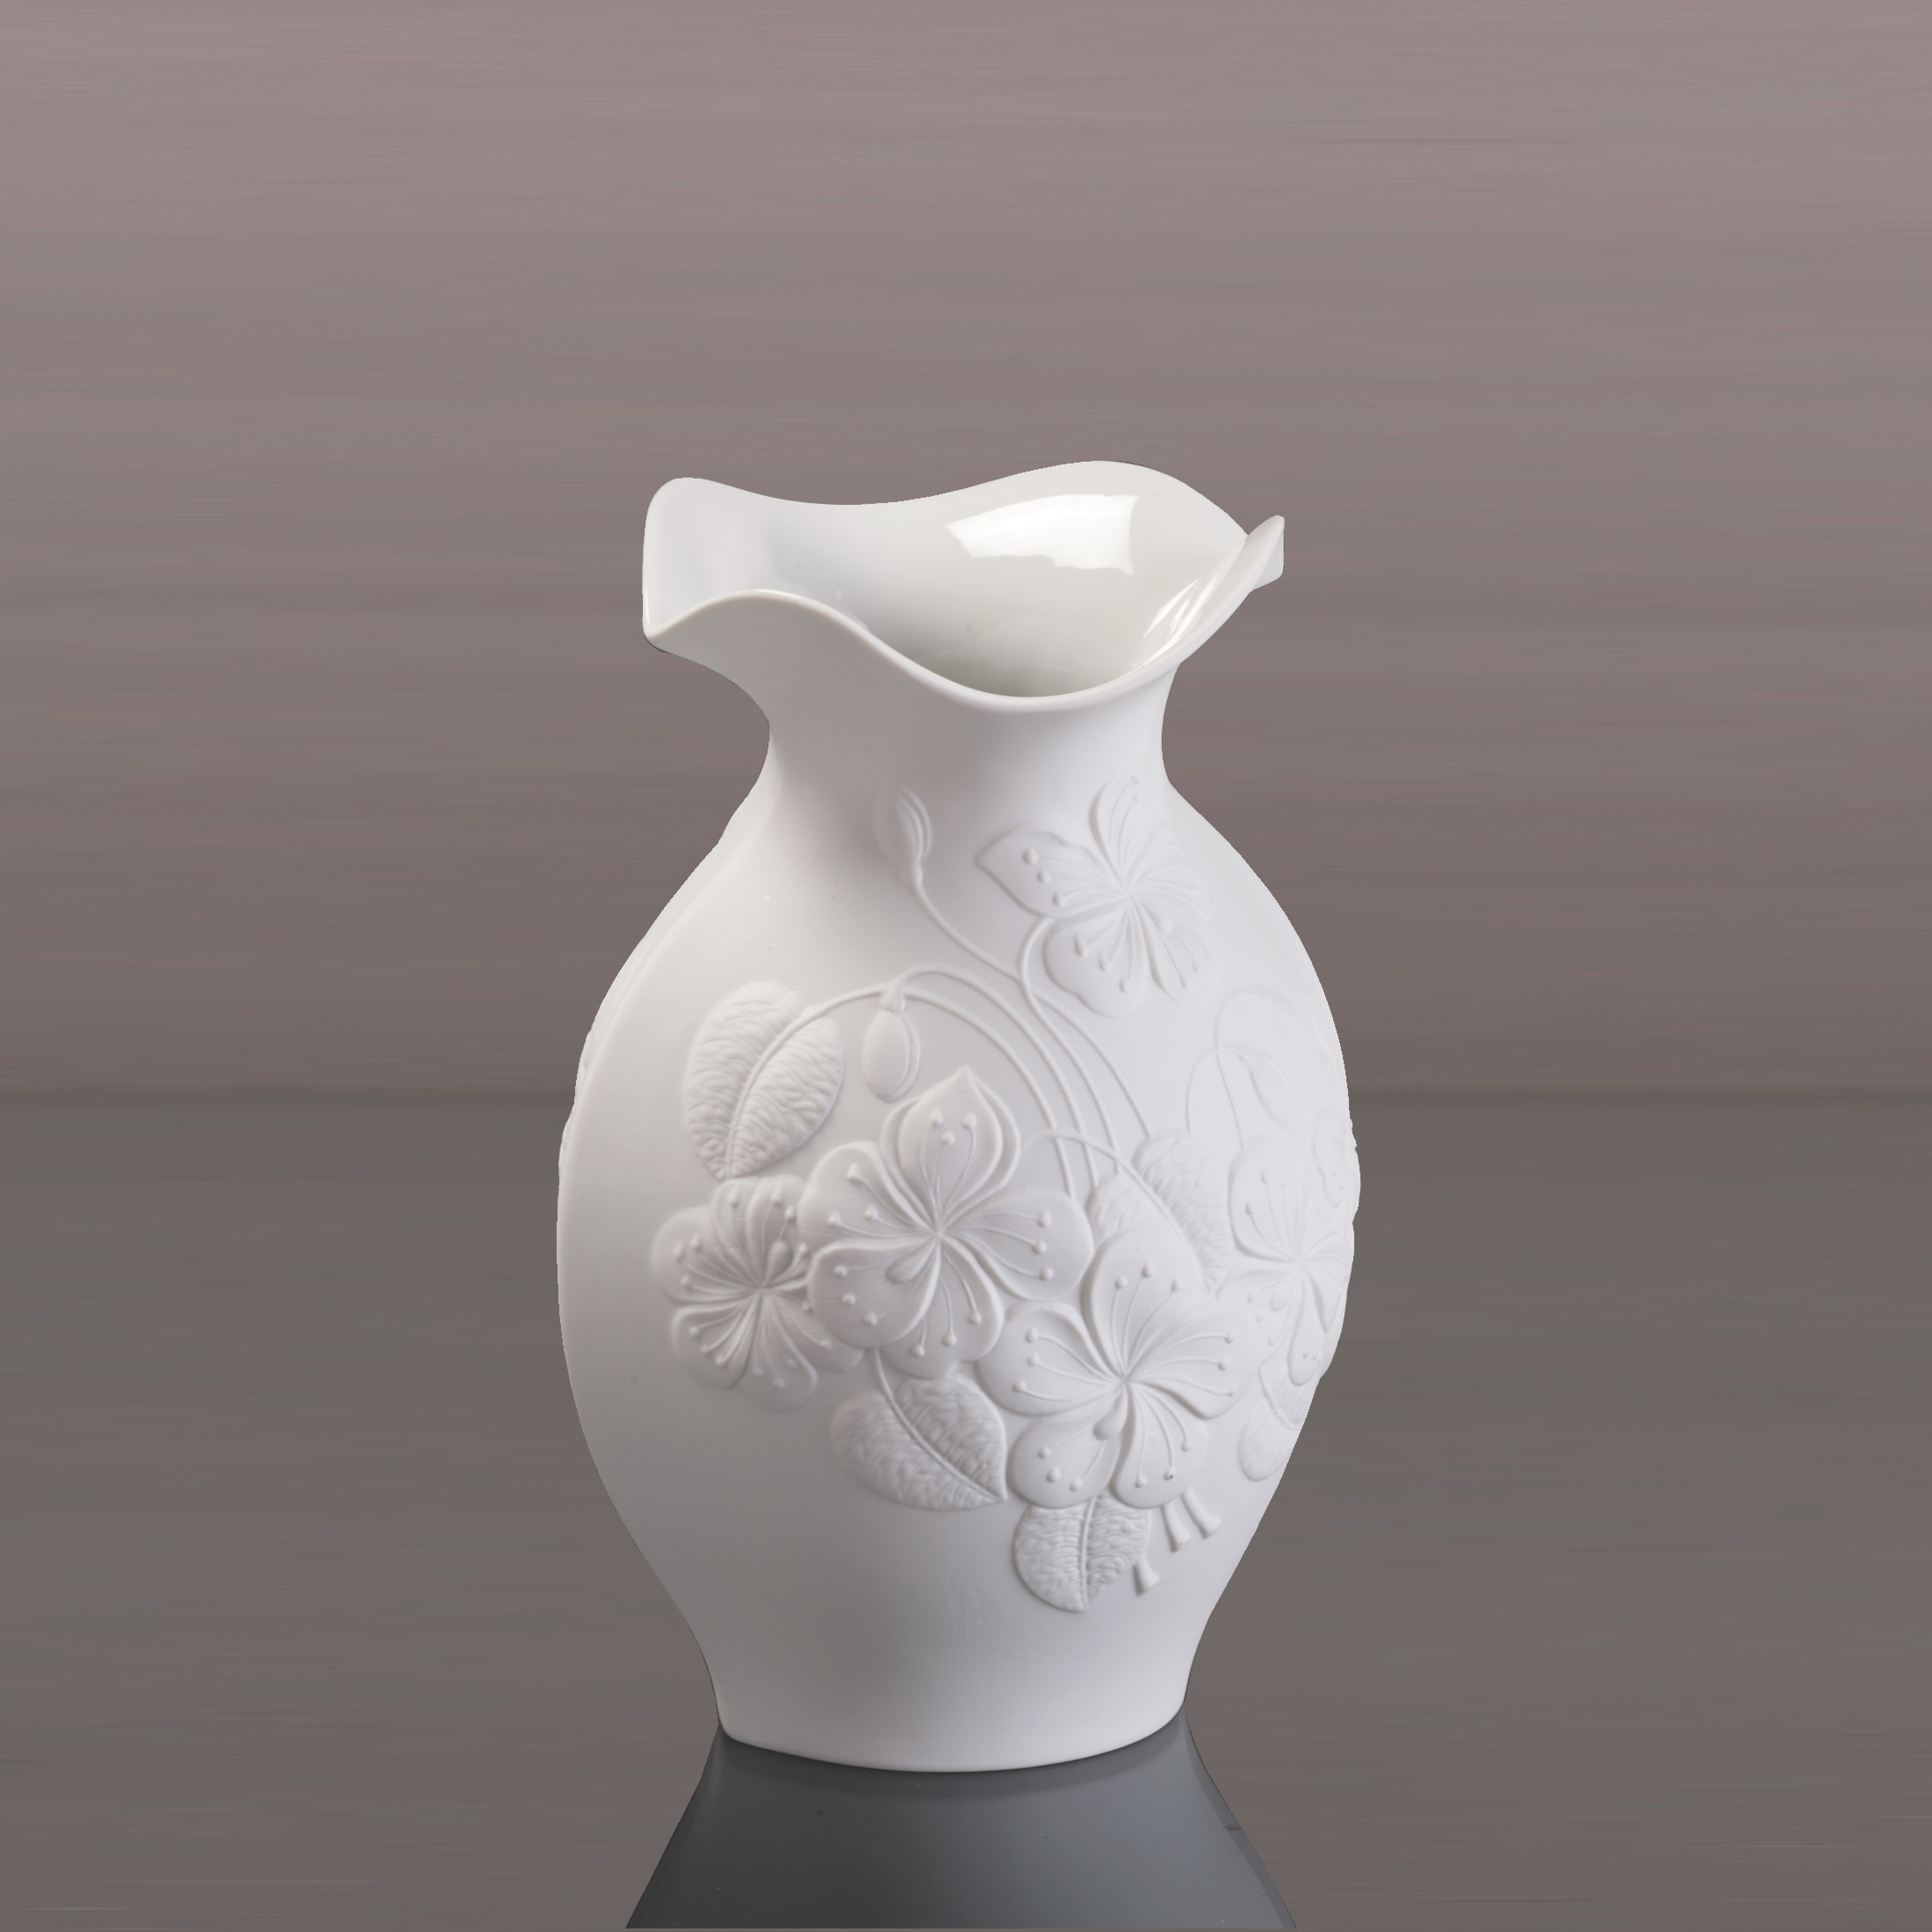 Dekoralia.de - Goebel Vase Floralie Kaiser Porzellan 20 cm